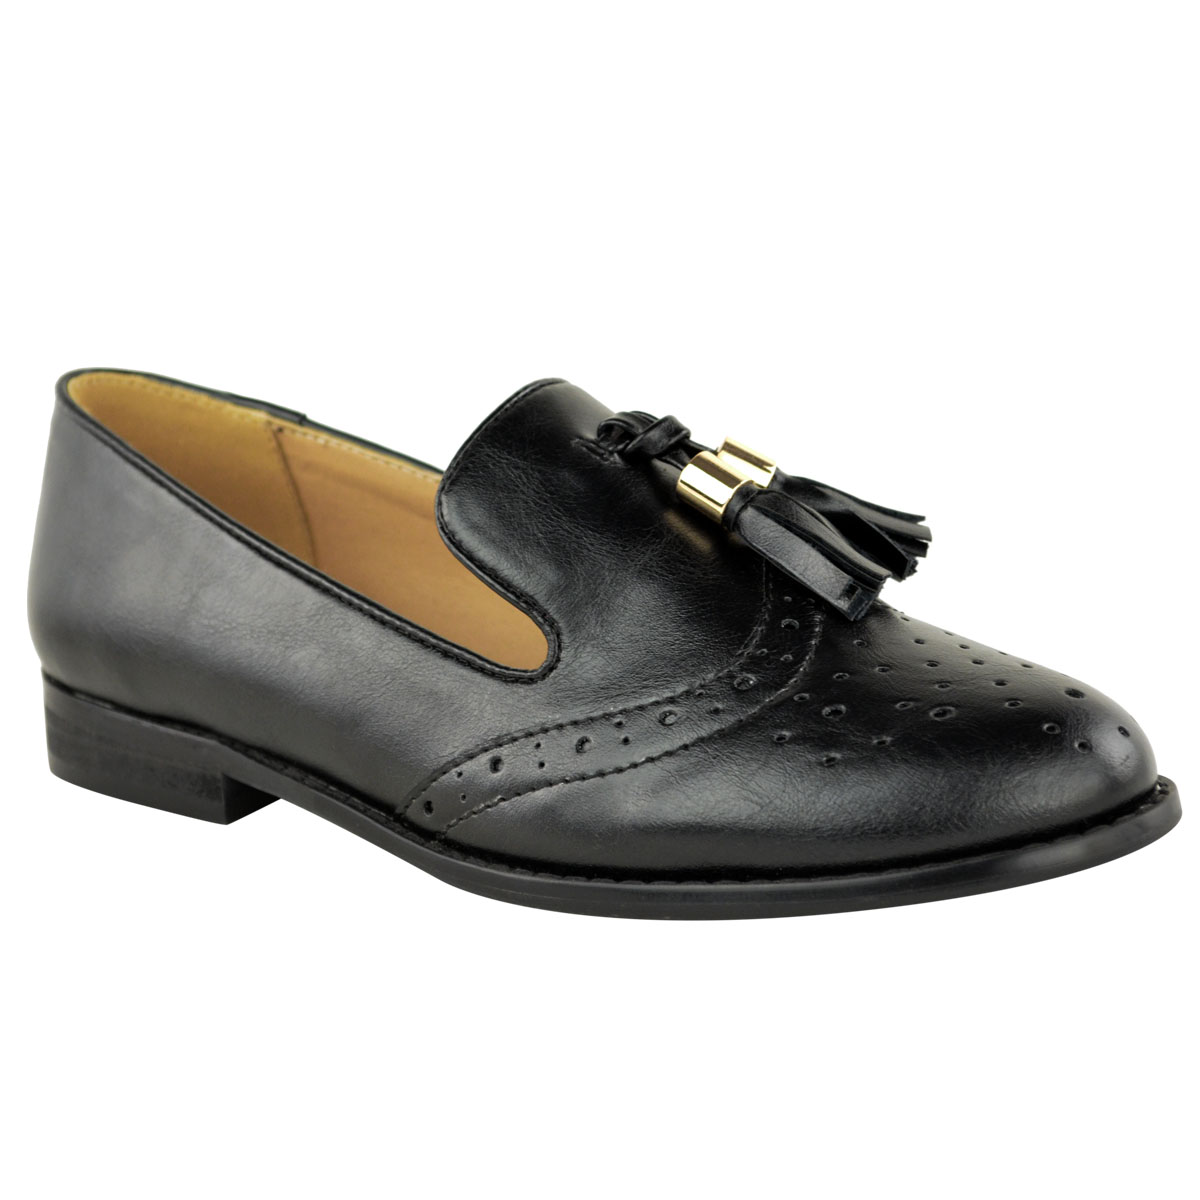 Womens Flat Slip On Tassel Loafers Ladies School Work Pumps Brogues Shoes Size 